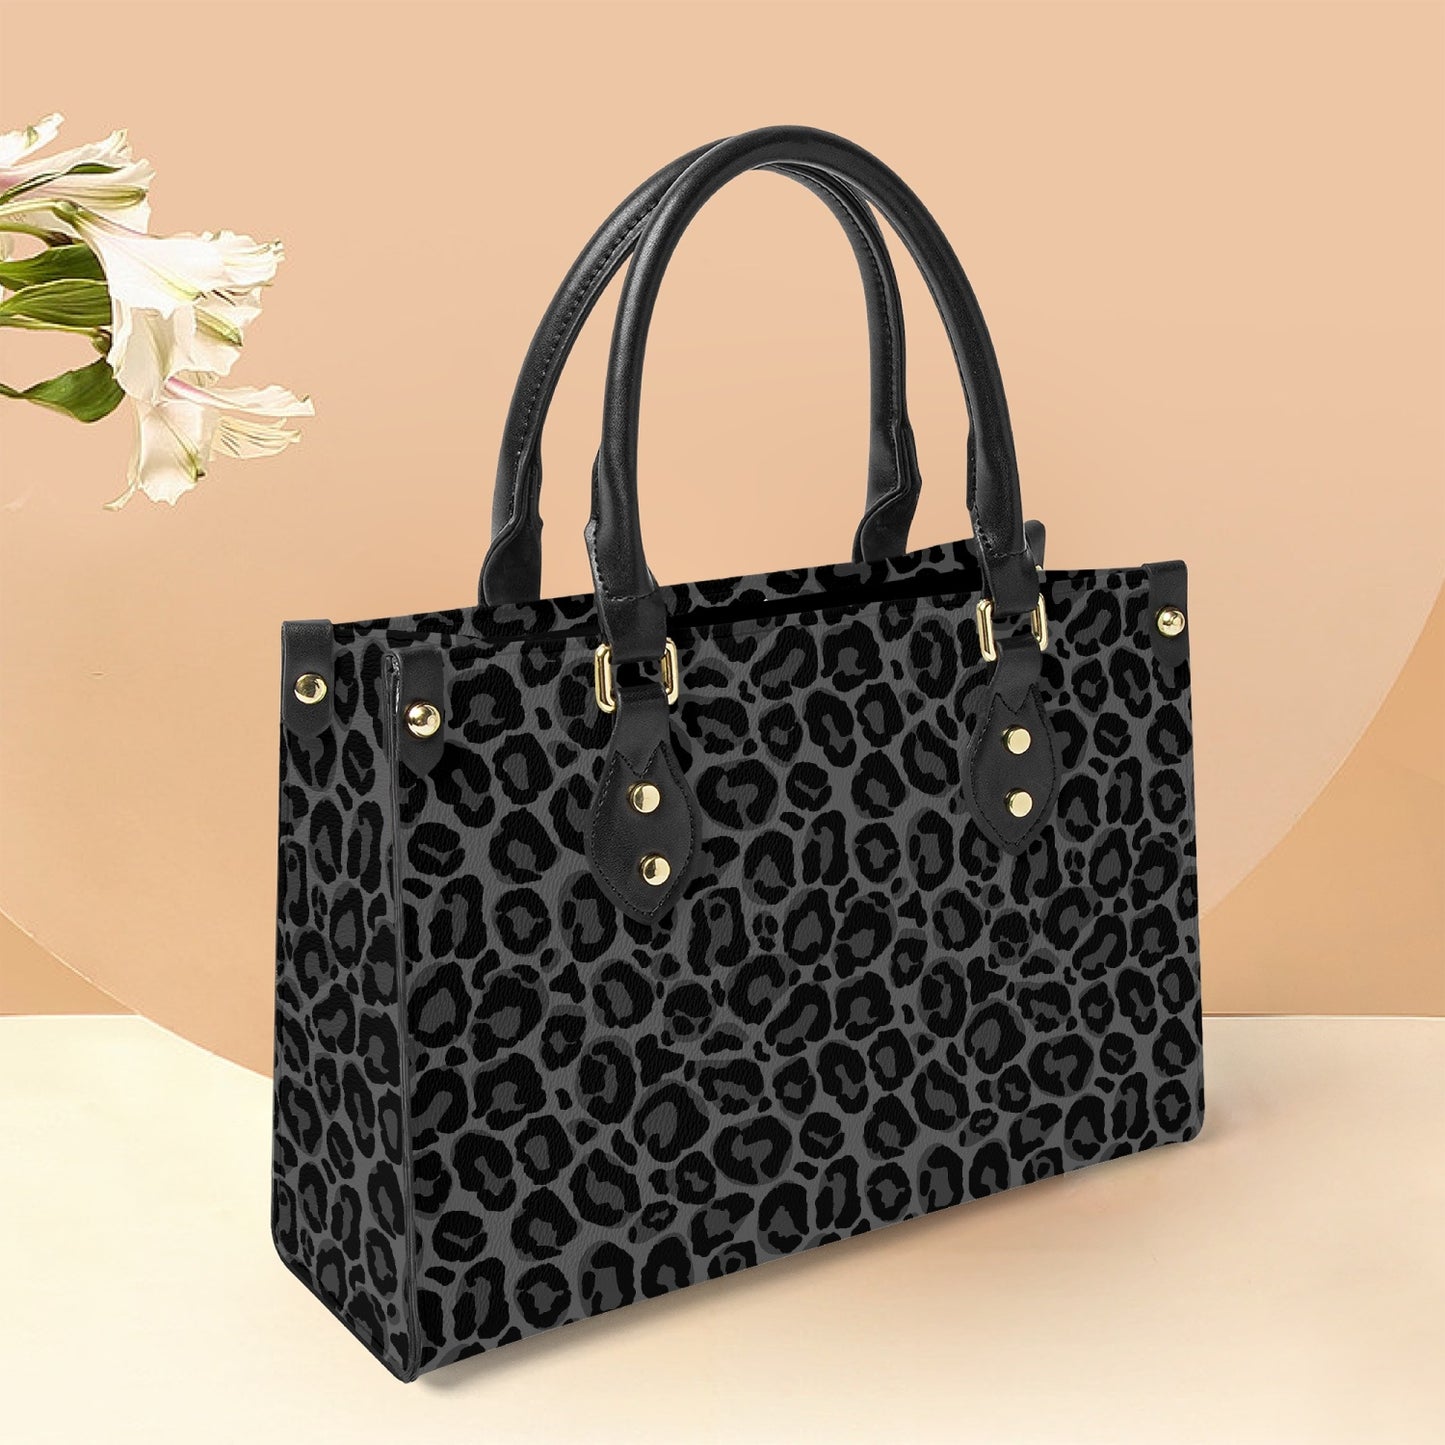 Black Leopard Tote Bag Purse, Cheetah Grey Print Top Handle Handbag Women Vegan Vegan Leather Zip Top Designer Handmade Work Bag Starcove Fashion